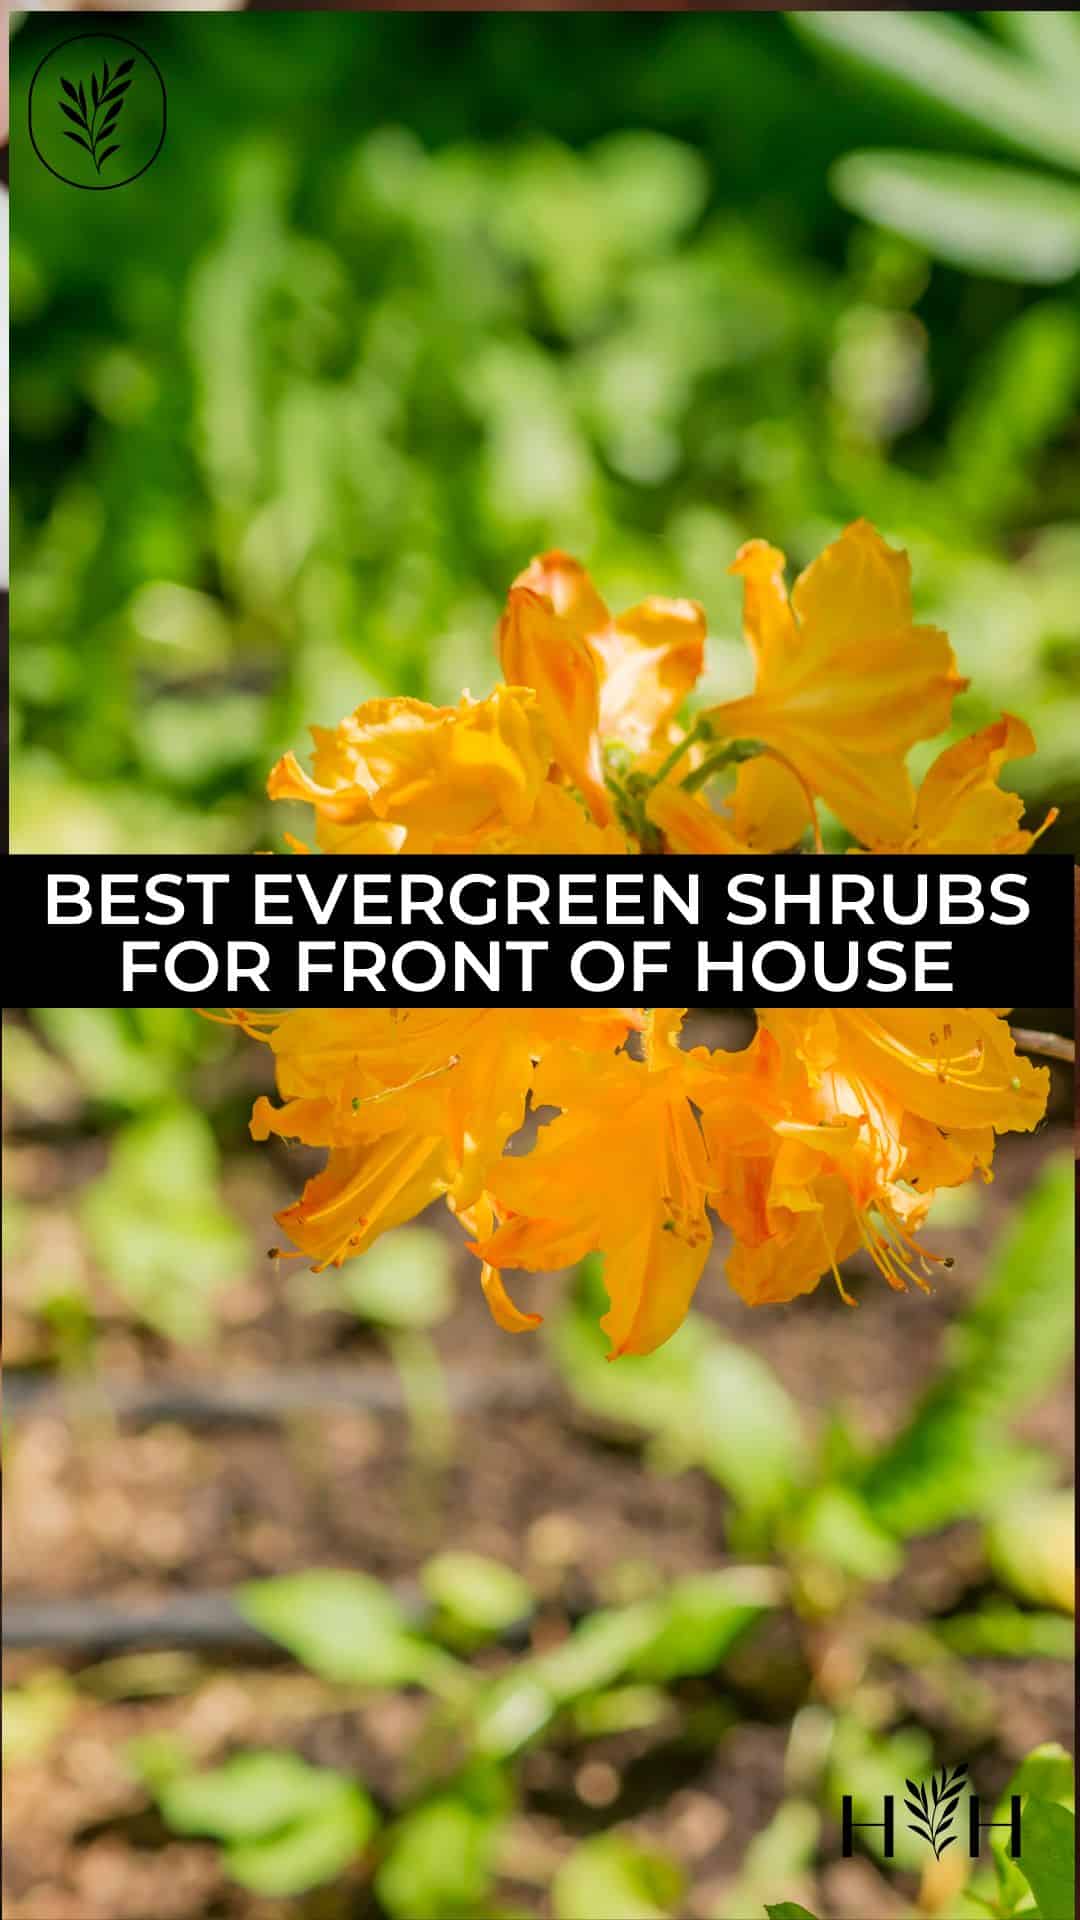 Best evergreen shrubs for front of house via @home4theharvest